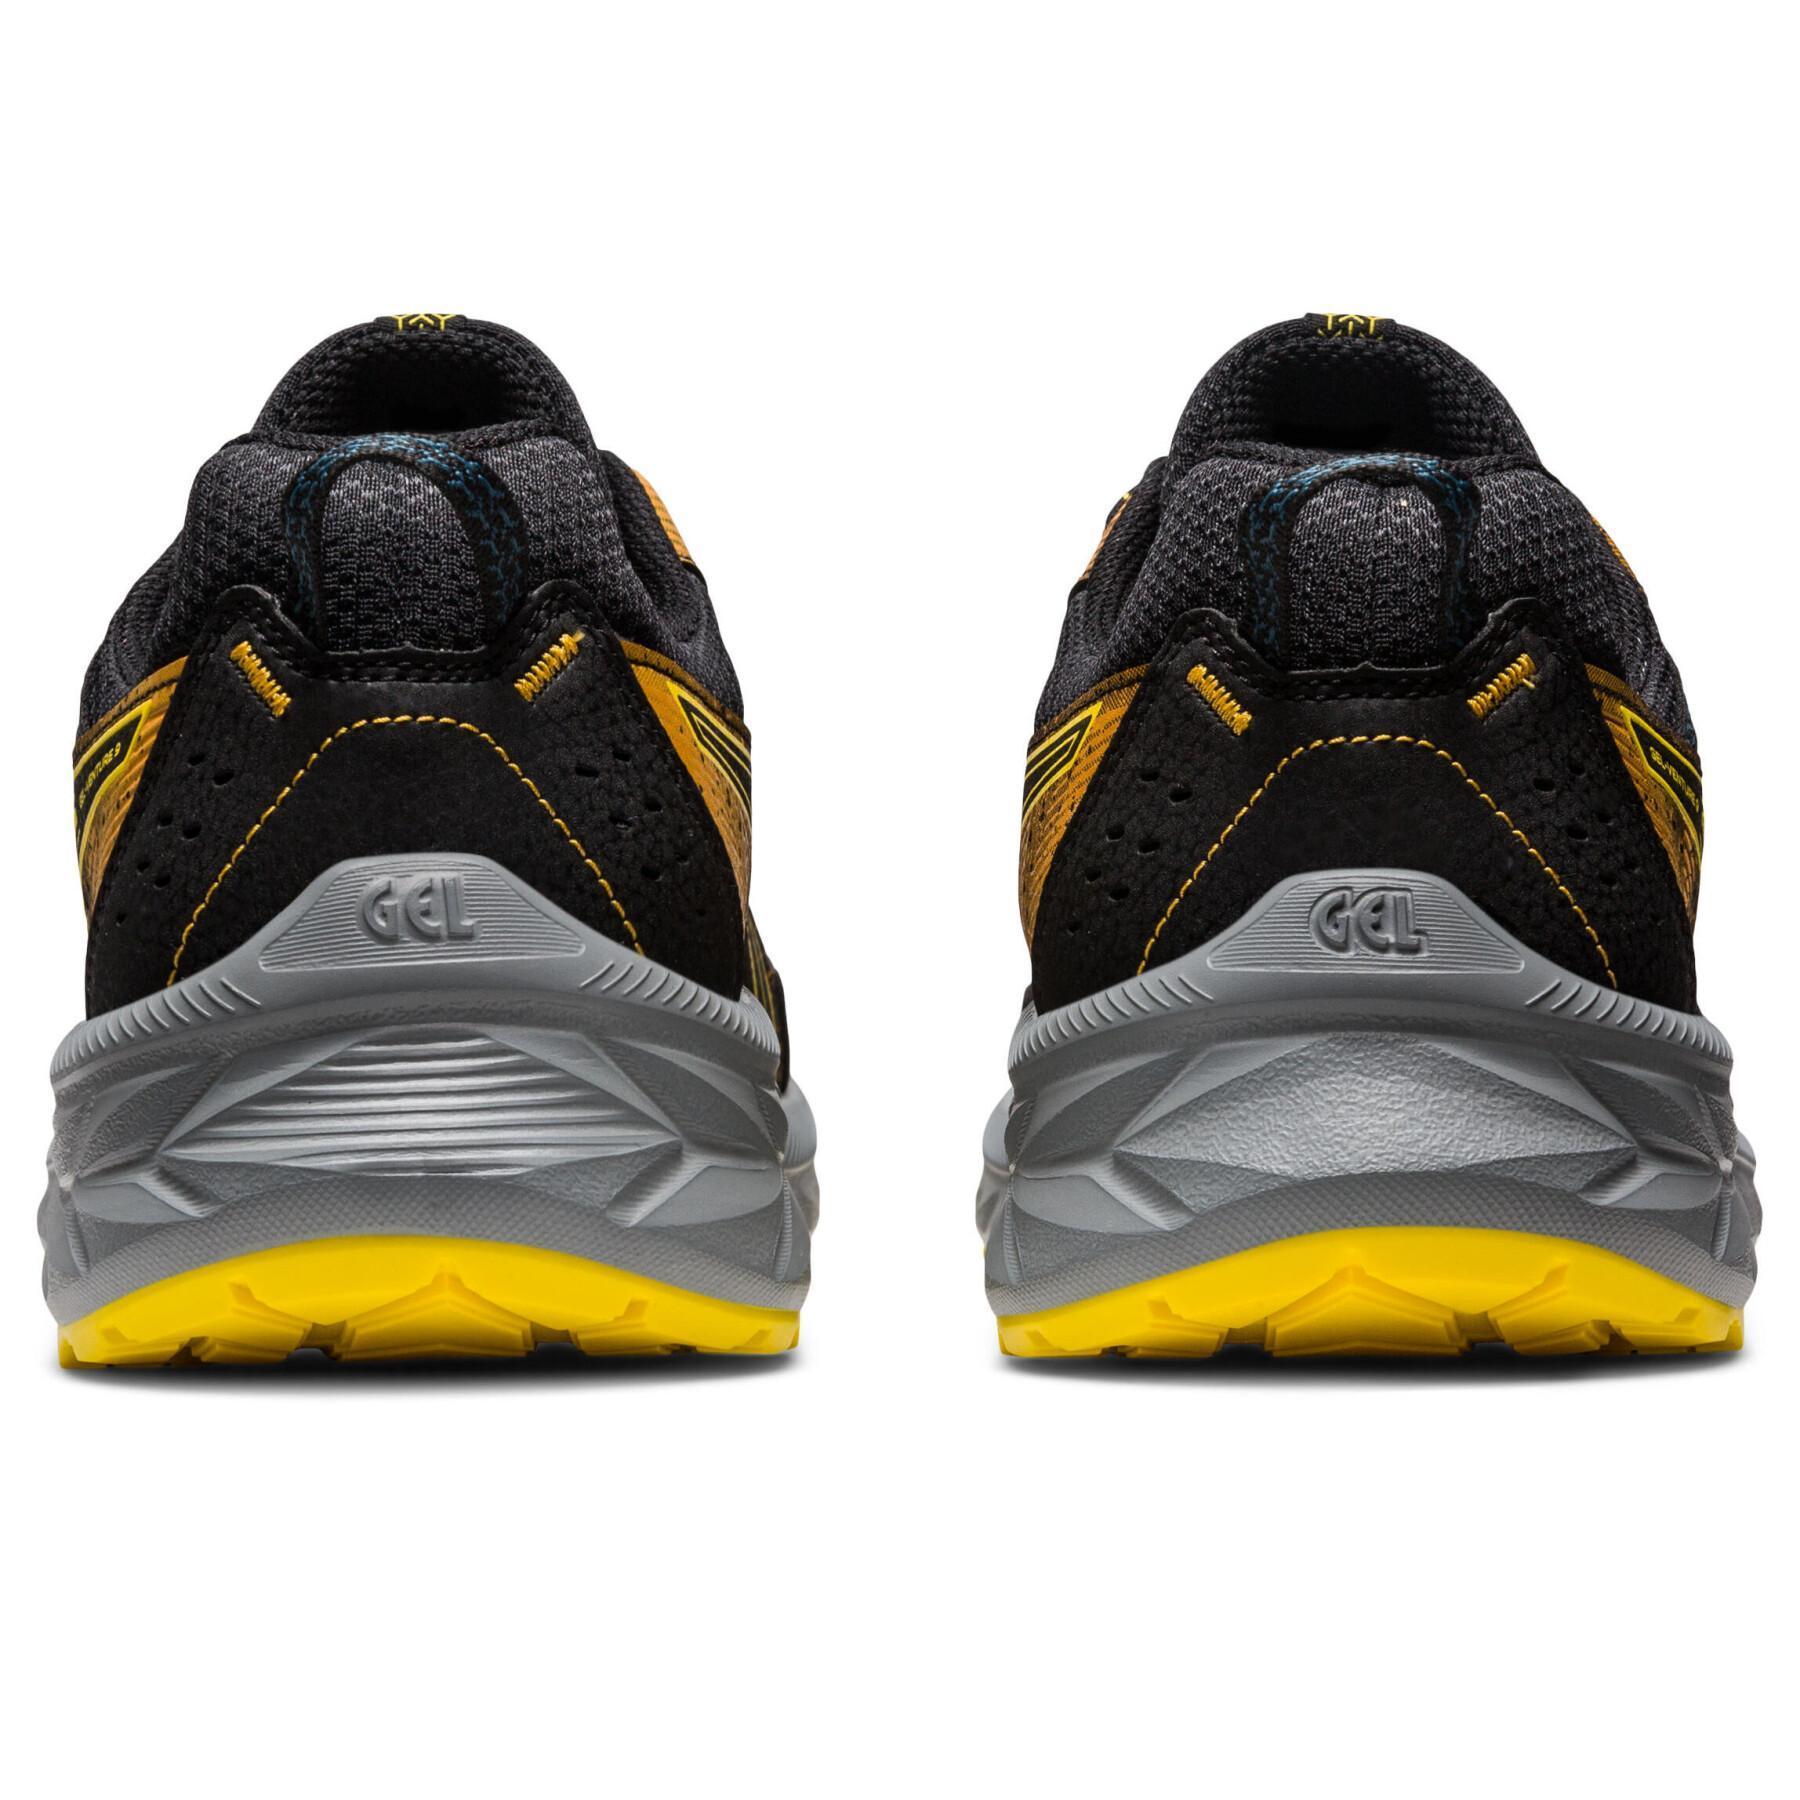 Chaussures de trail Asics Gel-Venture 9